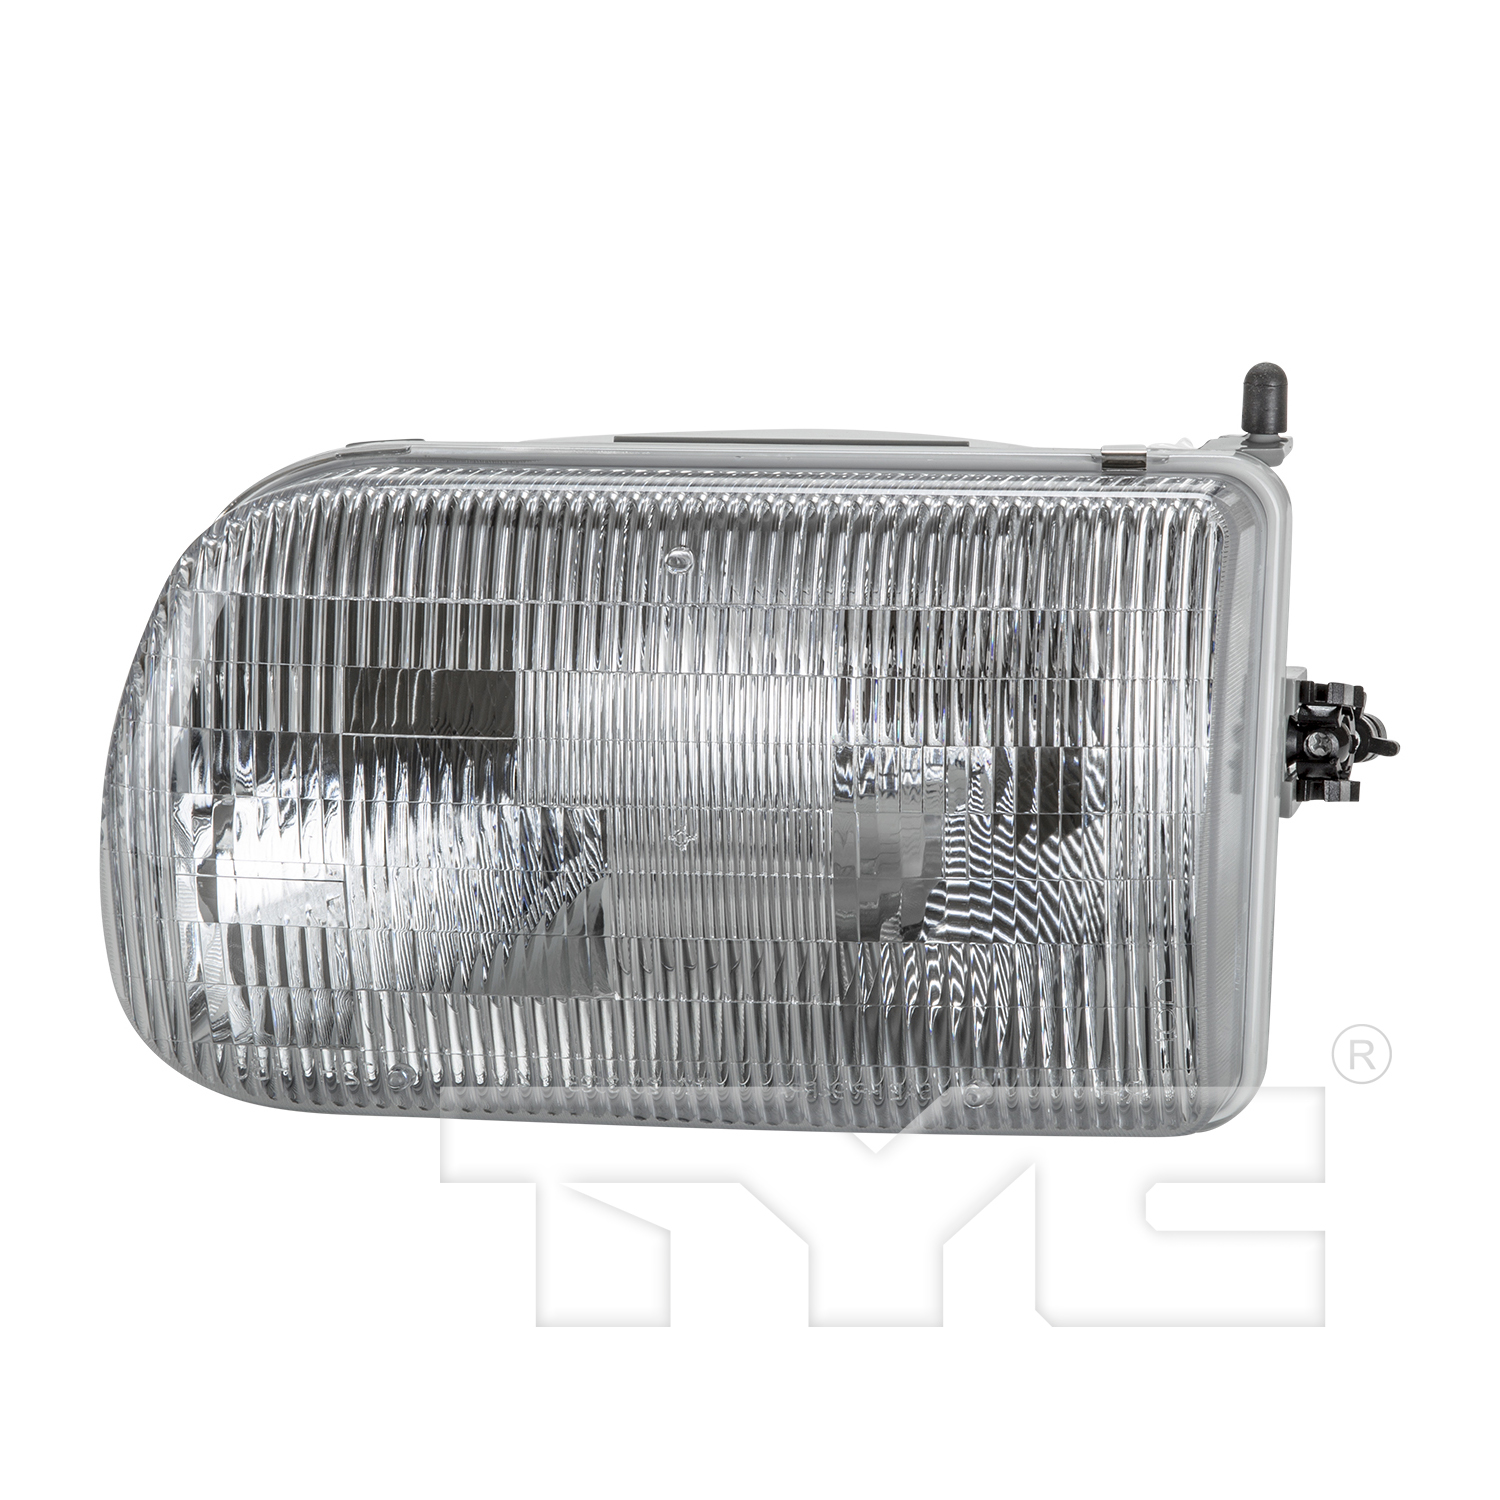 Aftermarket HEADLIGHTS for MAZDA - B4000, B4000,94-97,LT Headlamp assy composite